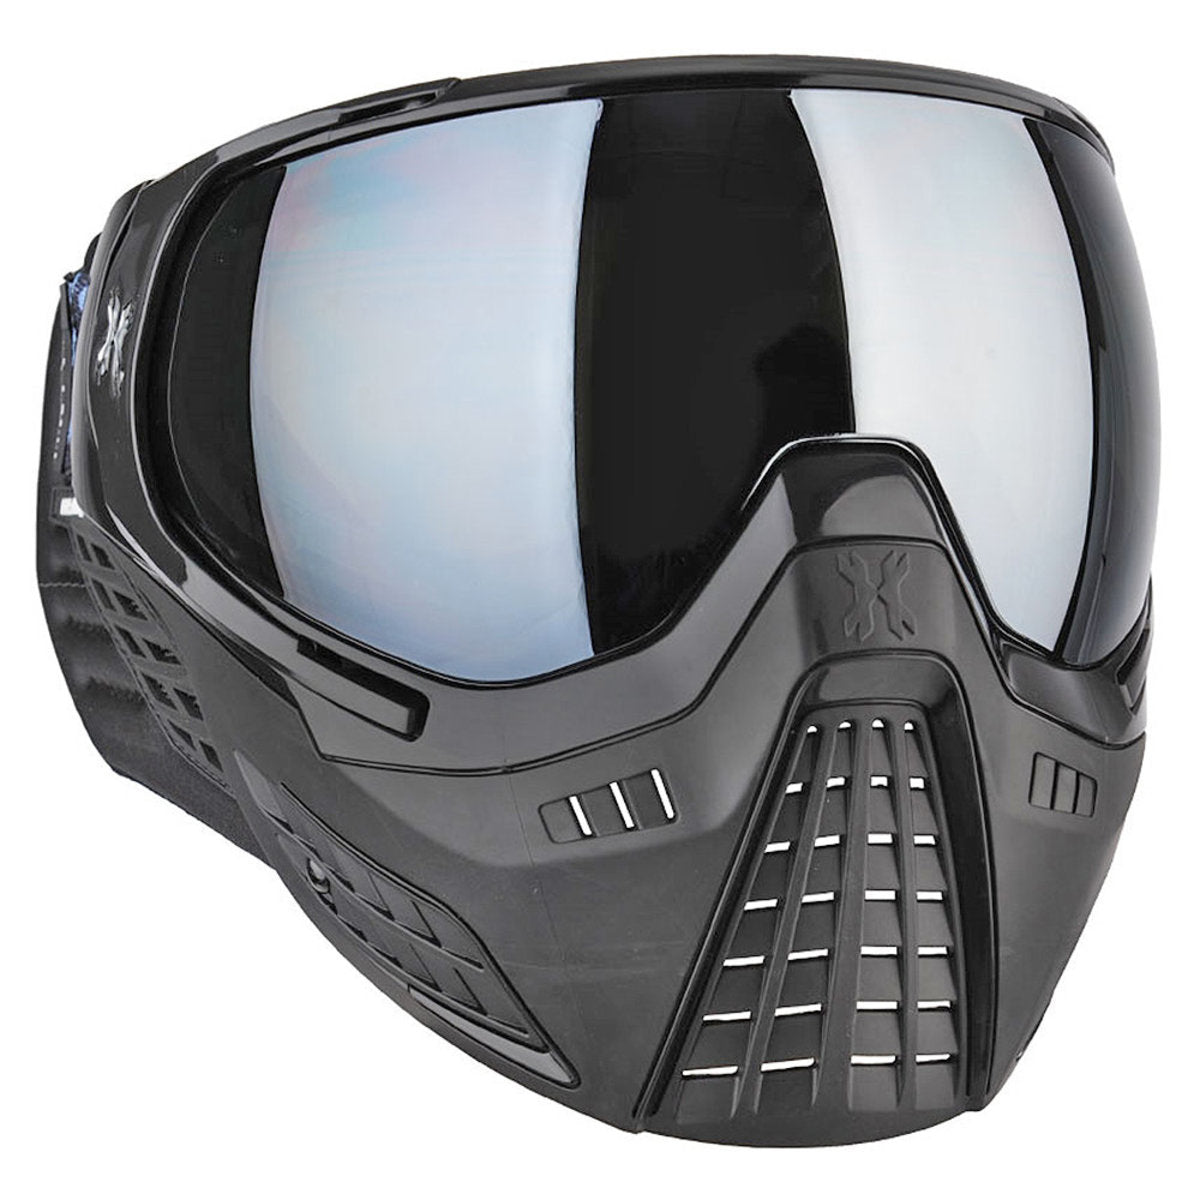 Hk Army Klr Le Onyx Paintball Goggles | Shop Paintball Goggles